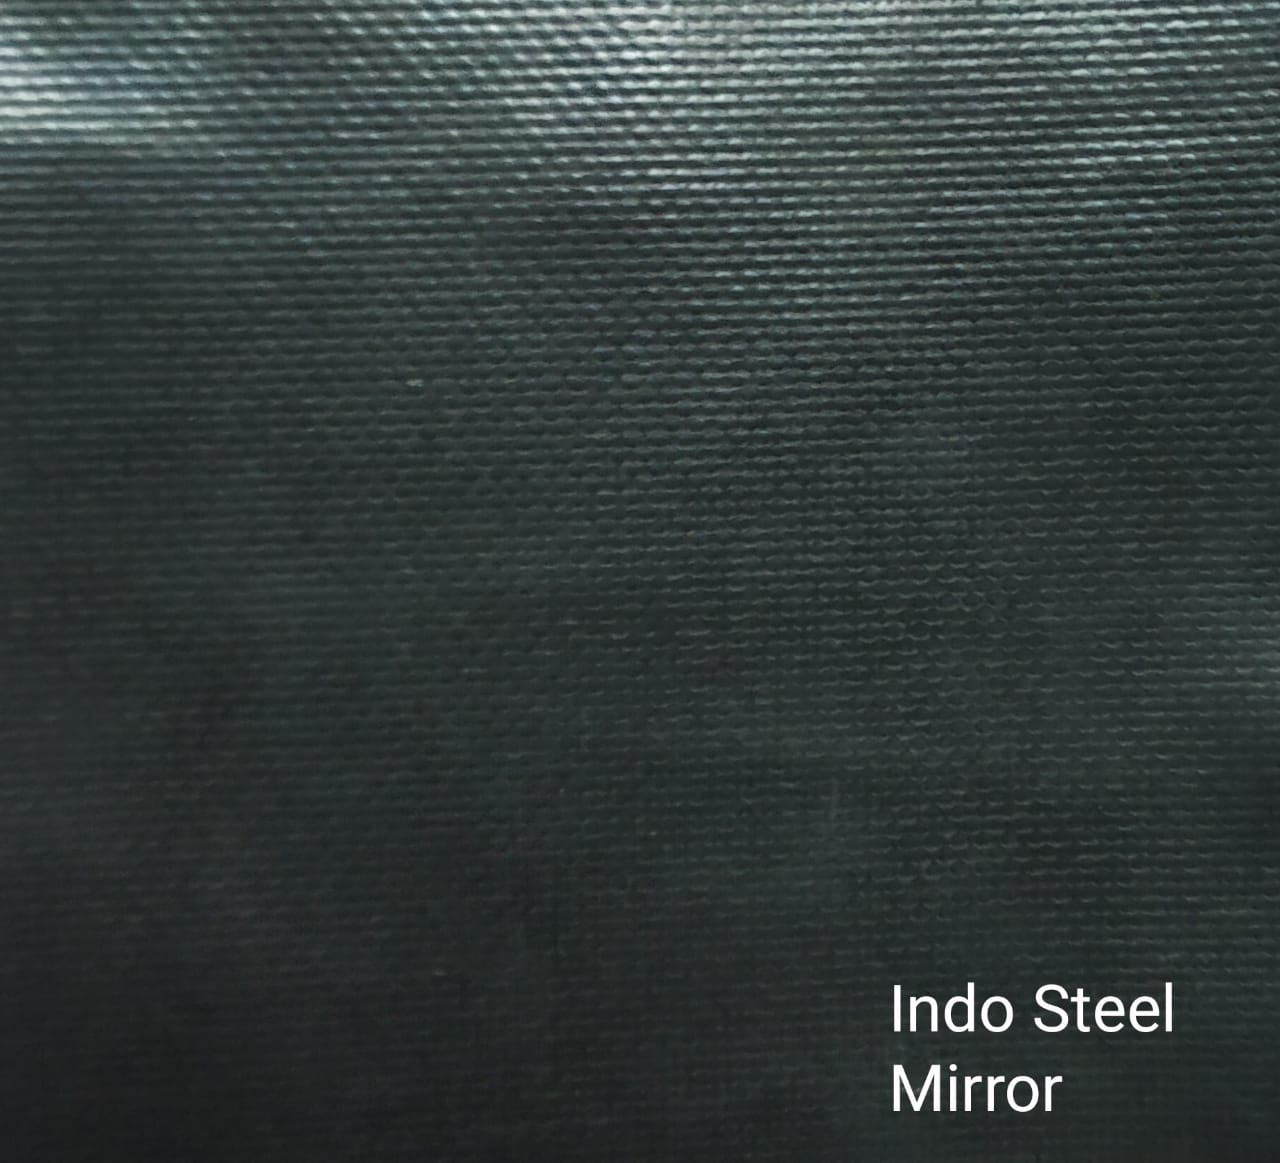 Indo steel